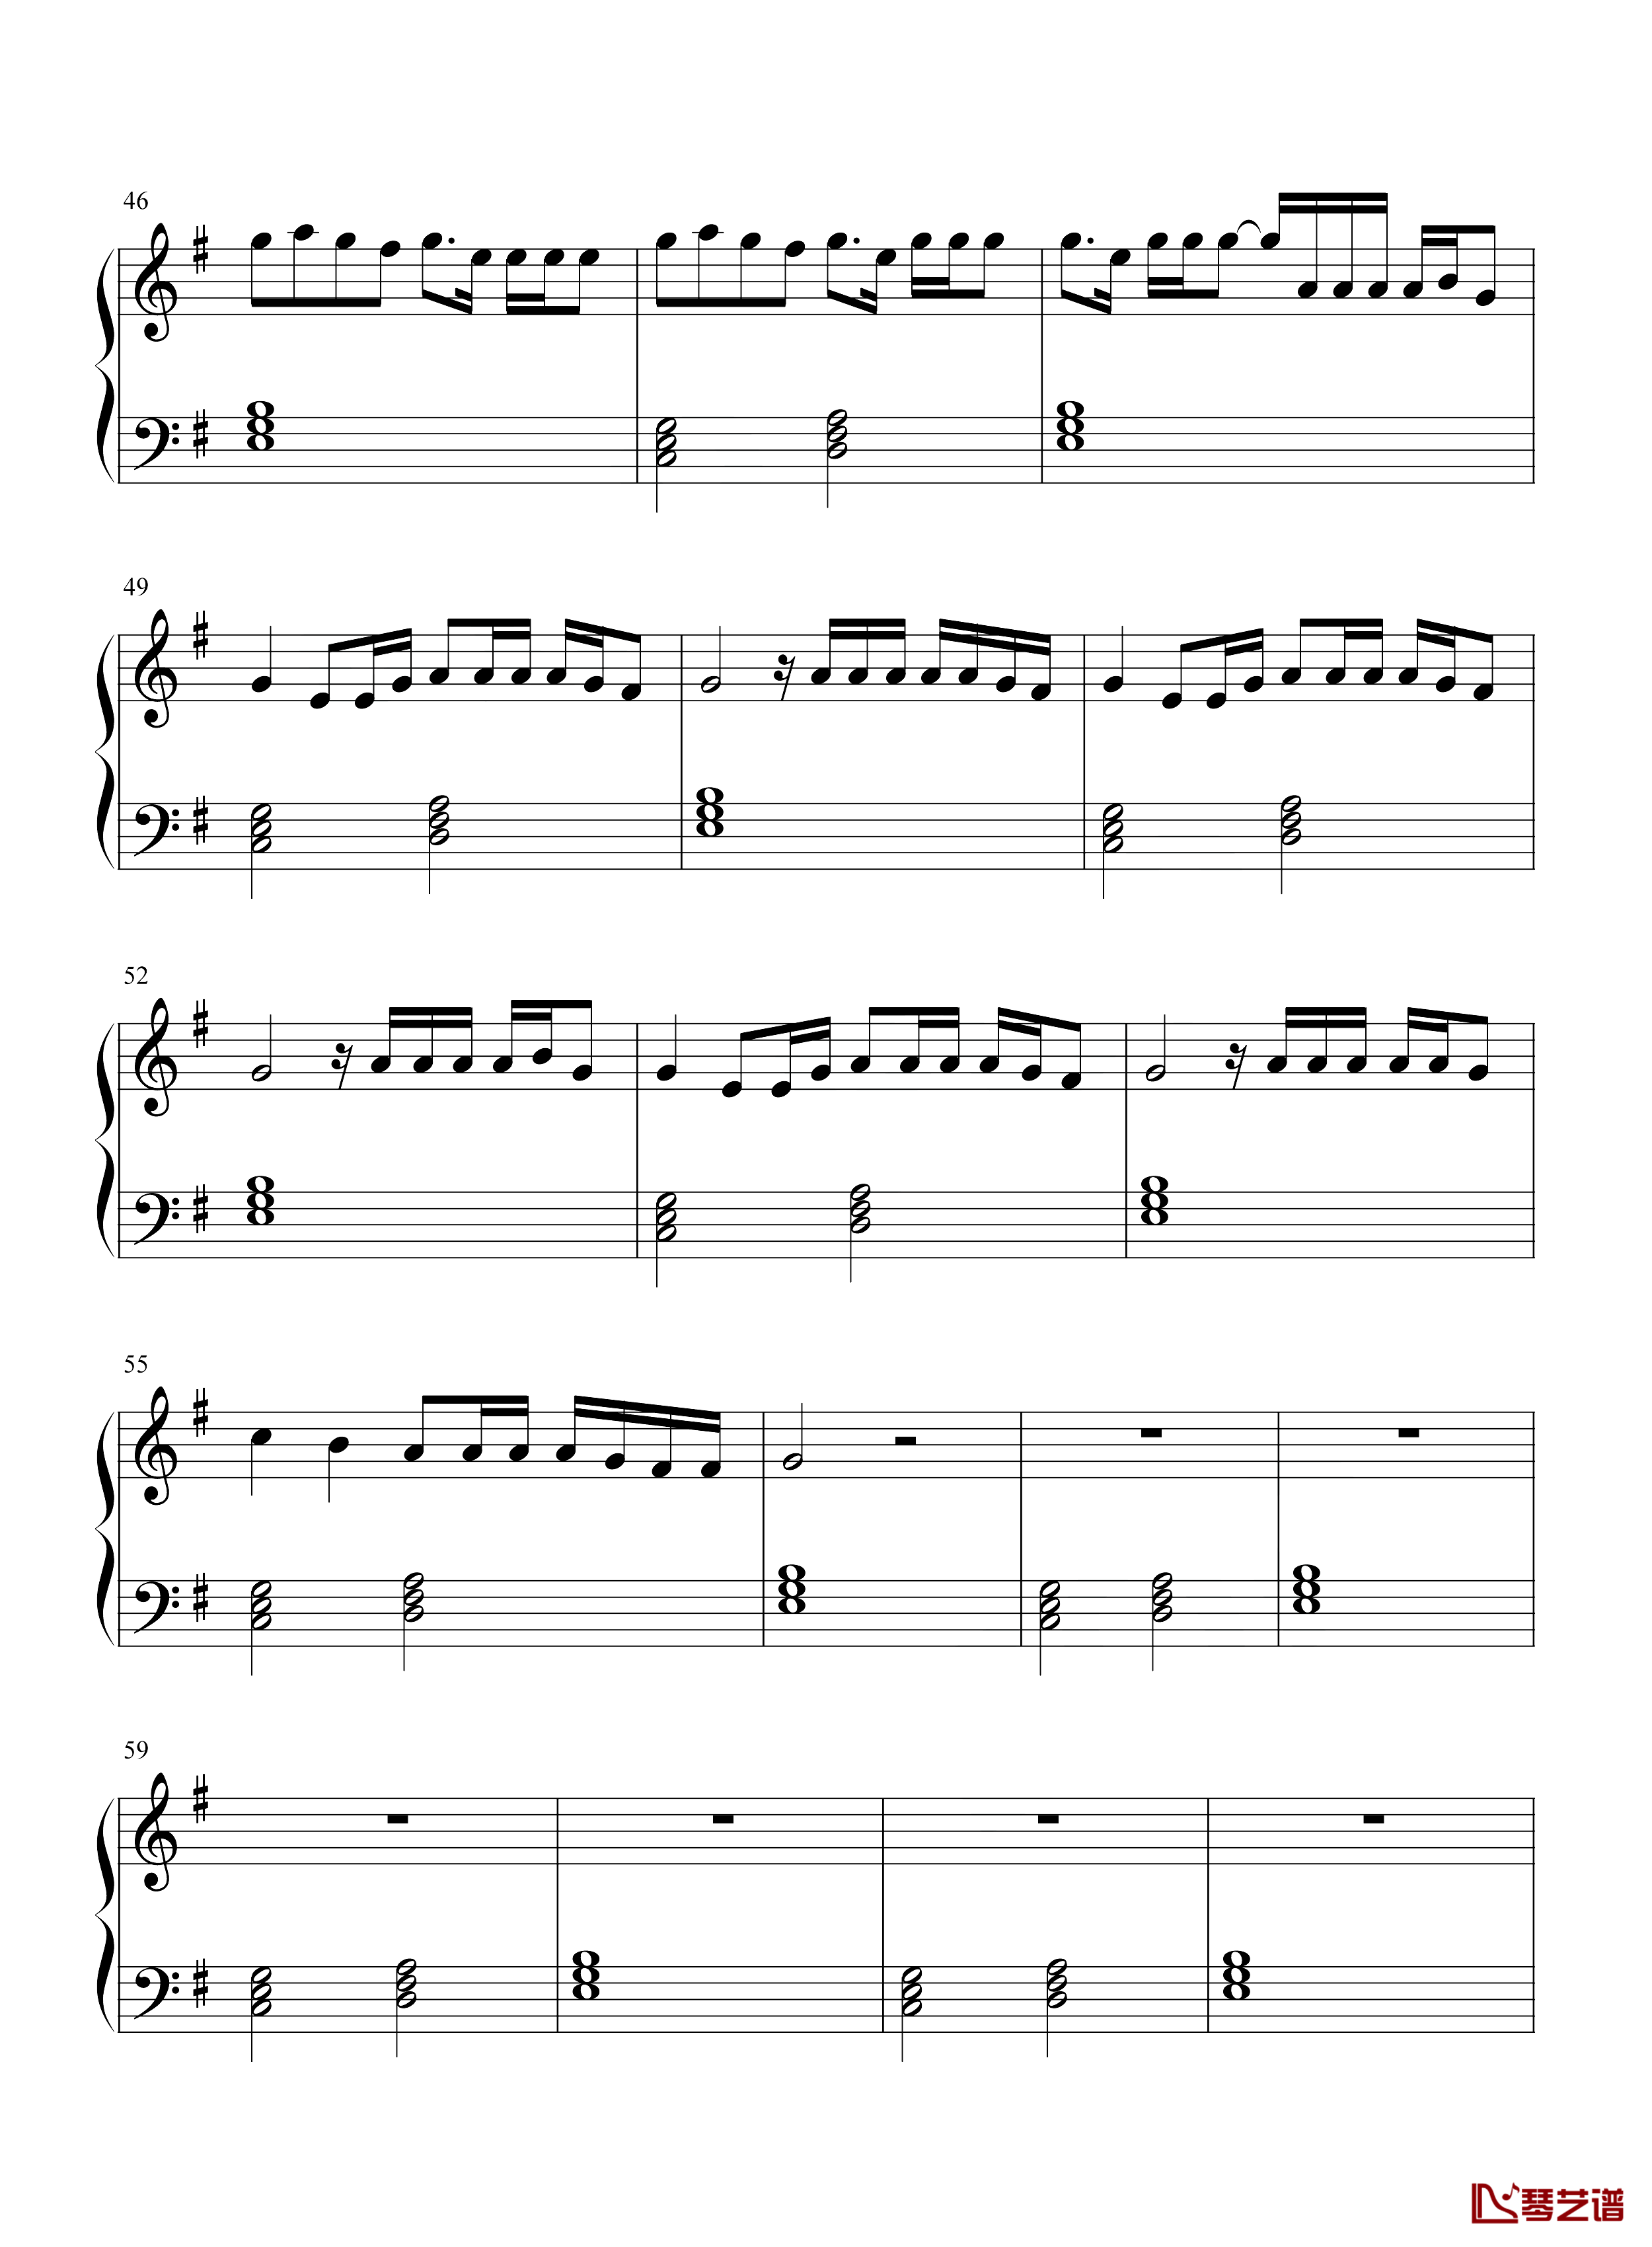 Envolver钢琴谱-Anitta-YouTube全球音乐榜前10名之一歌曲4